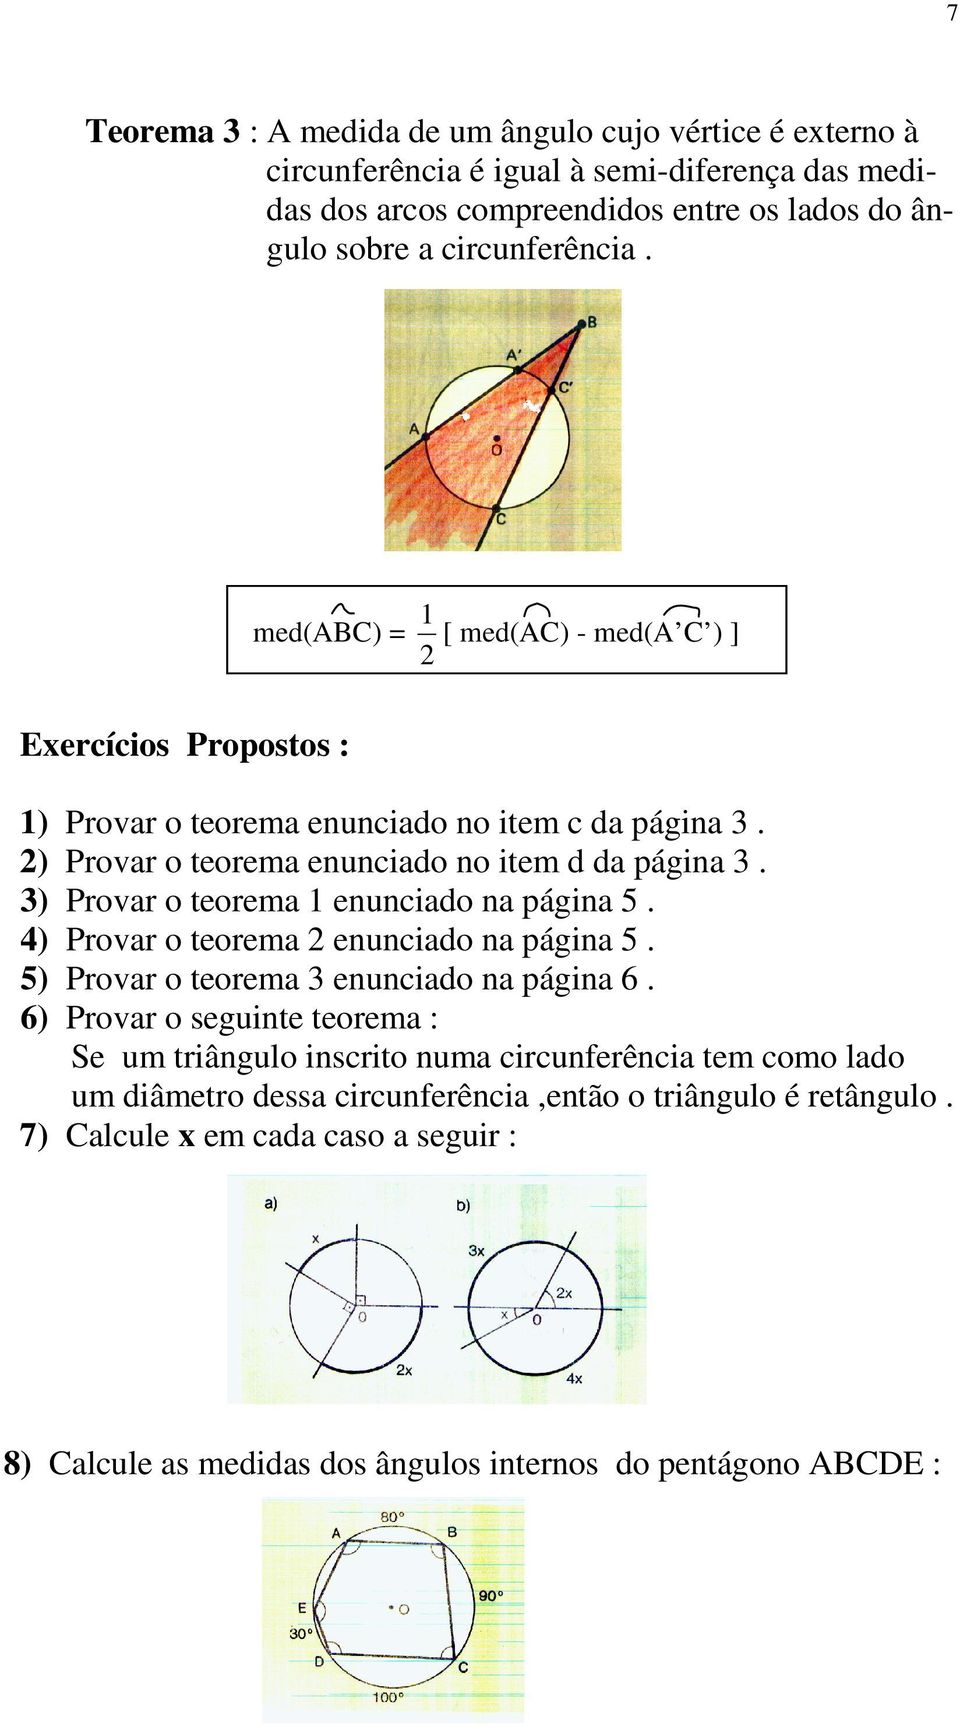 3) Provar o teorema 1 enunciado na página 5. 4) Provar o teorema 2 enunciado na página 5. 5) Provar o teorema 3 enunciado na página 6.